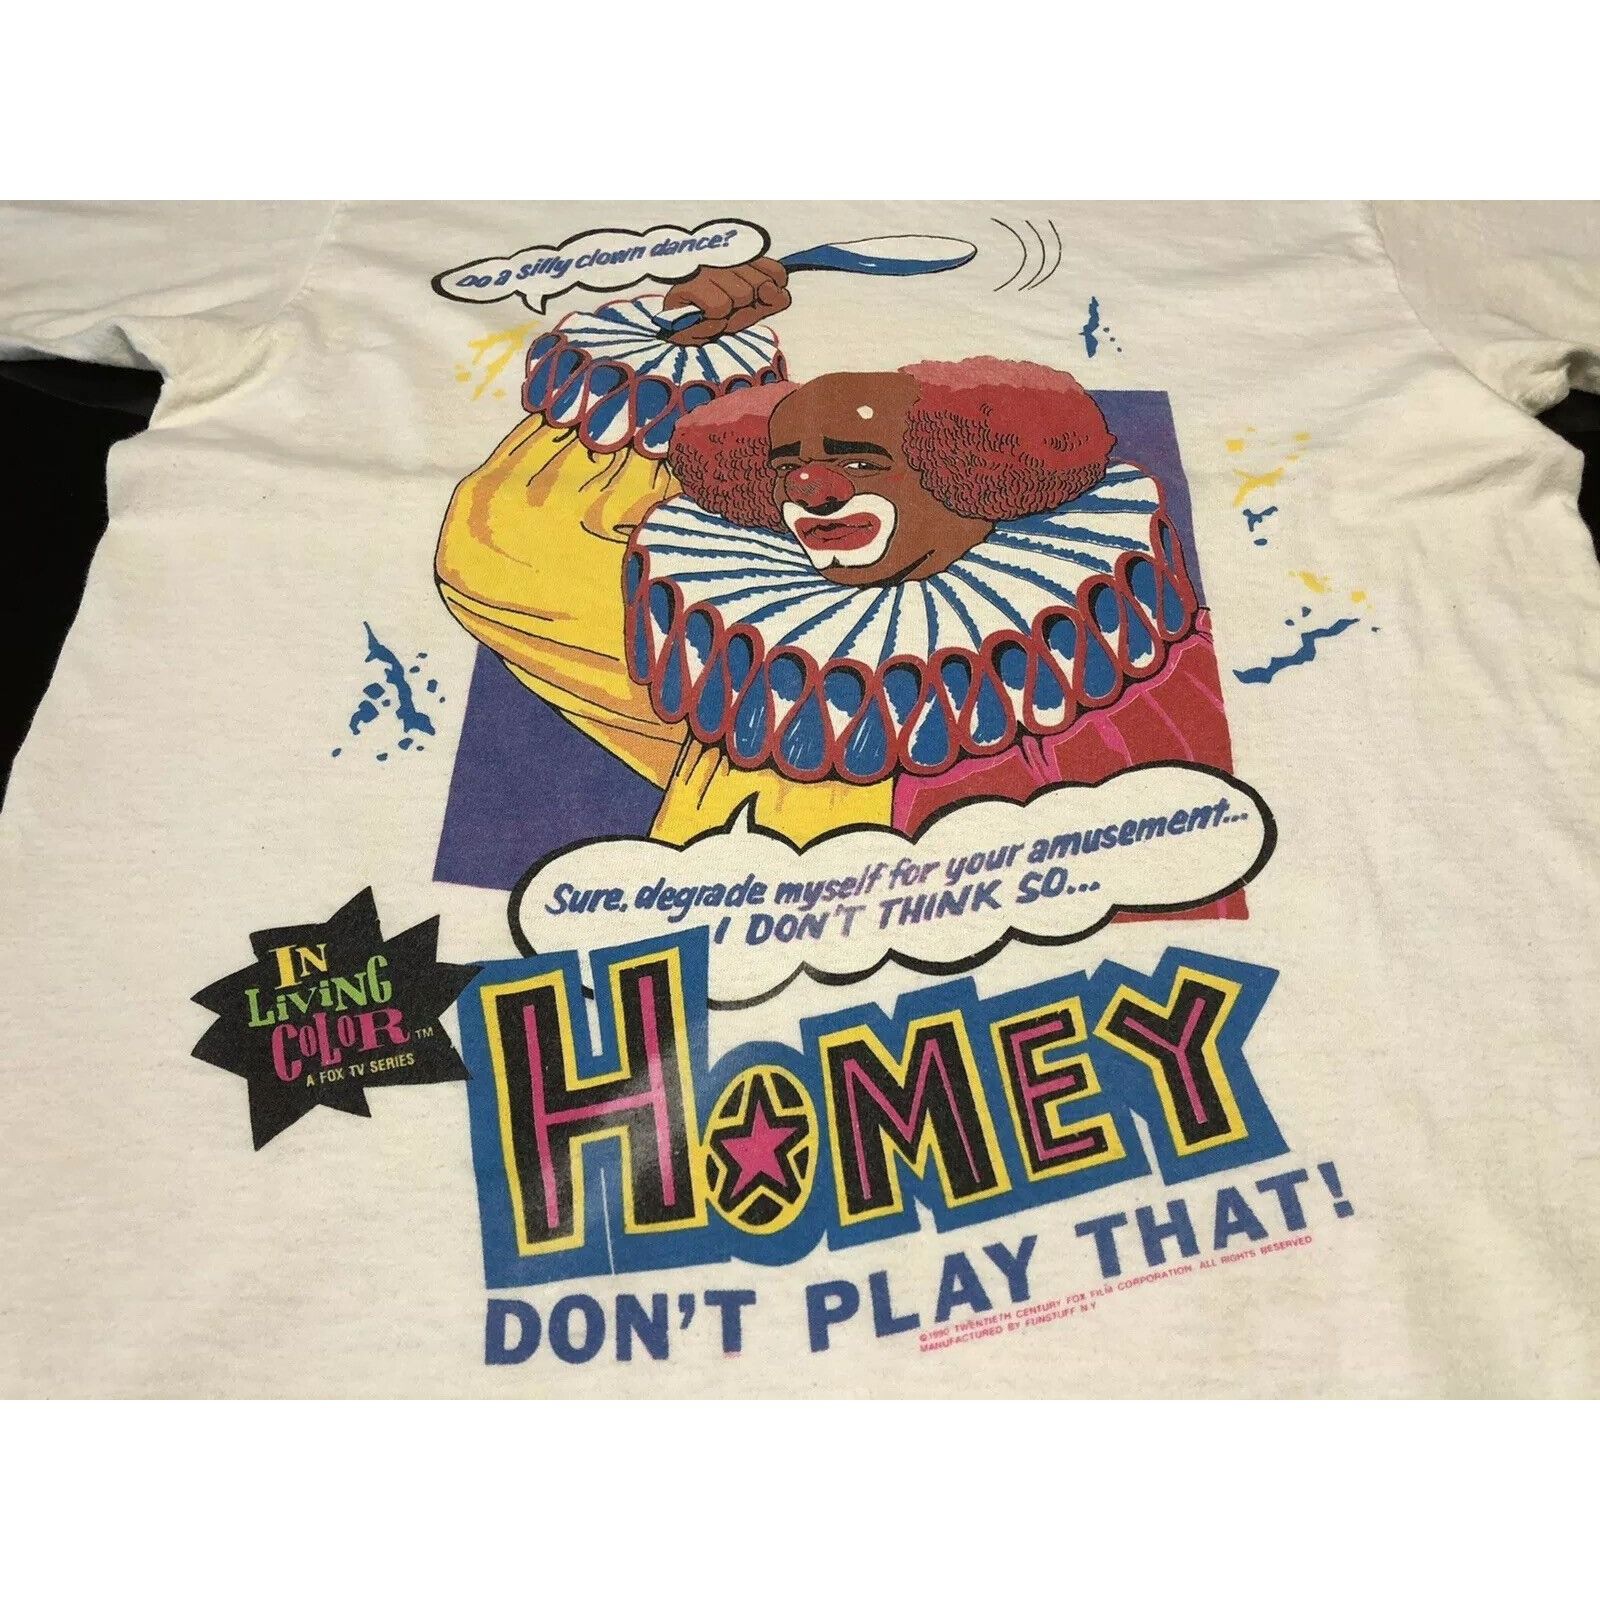 Vintage Rare Vintage In Living Color 1990 Homey the Clown T-Shirt Si Size US M / EU 48-50 / 2 - 3 Thumbnail